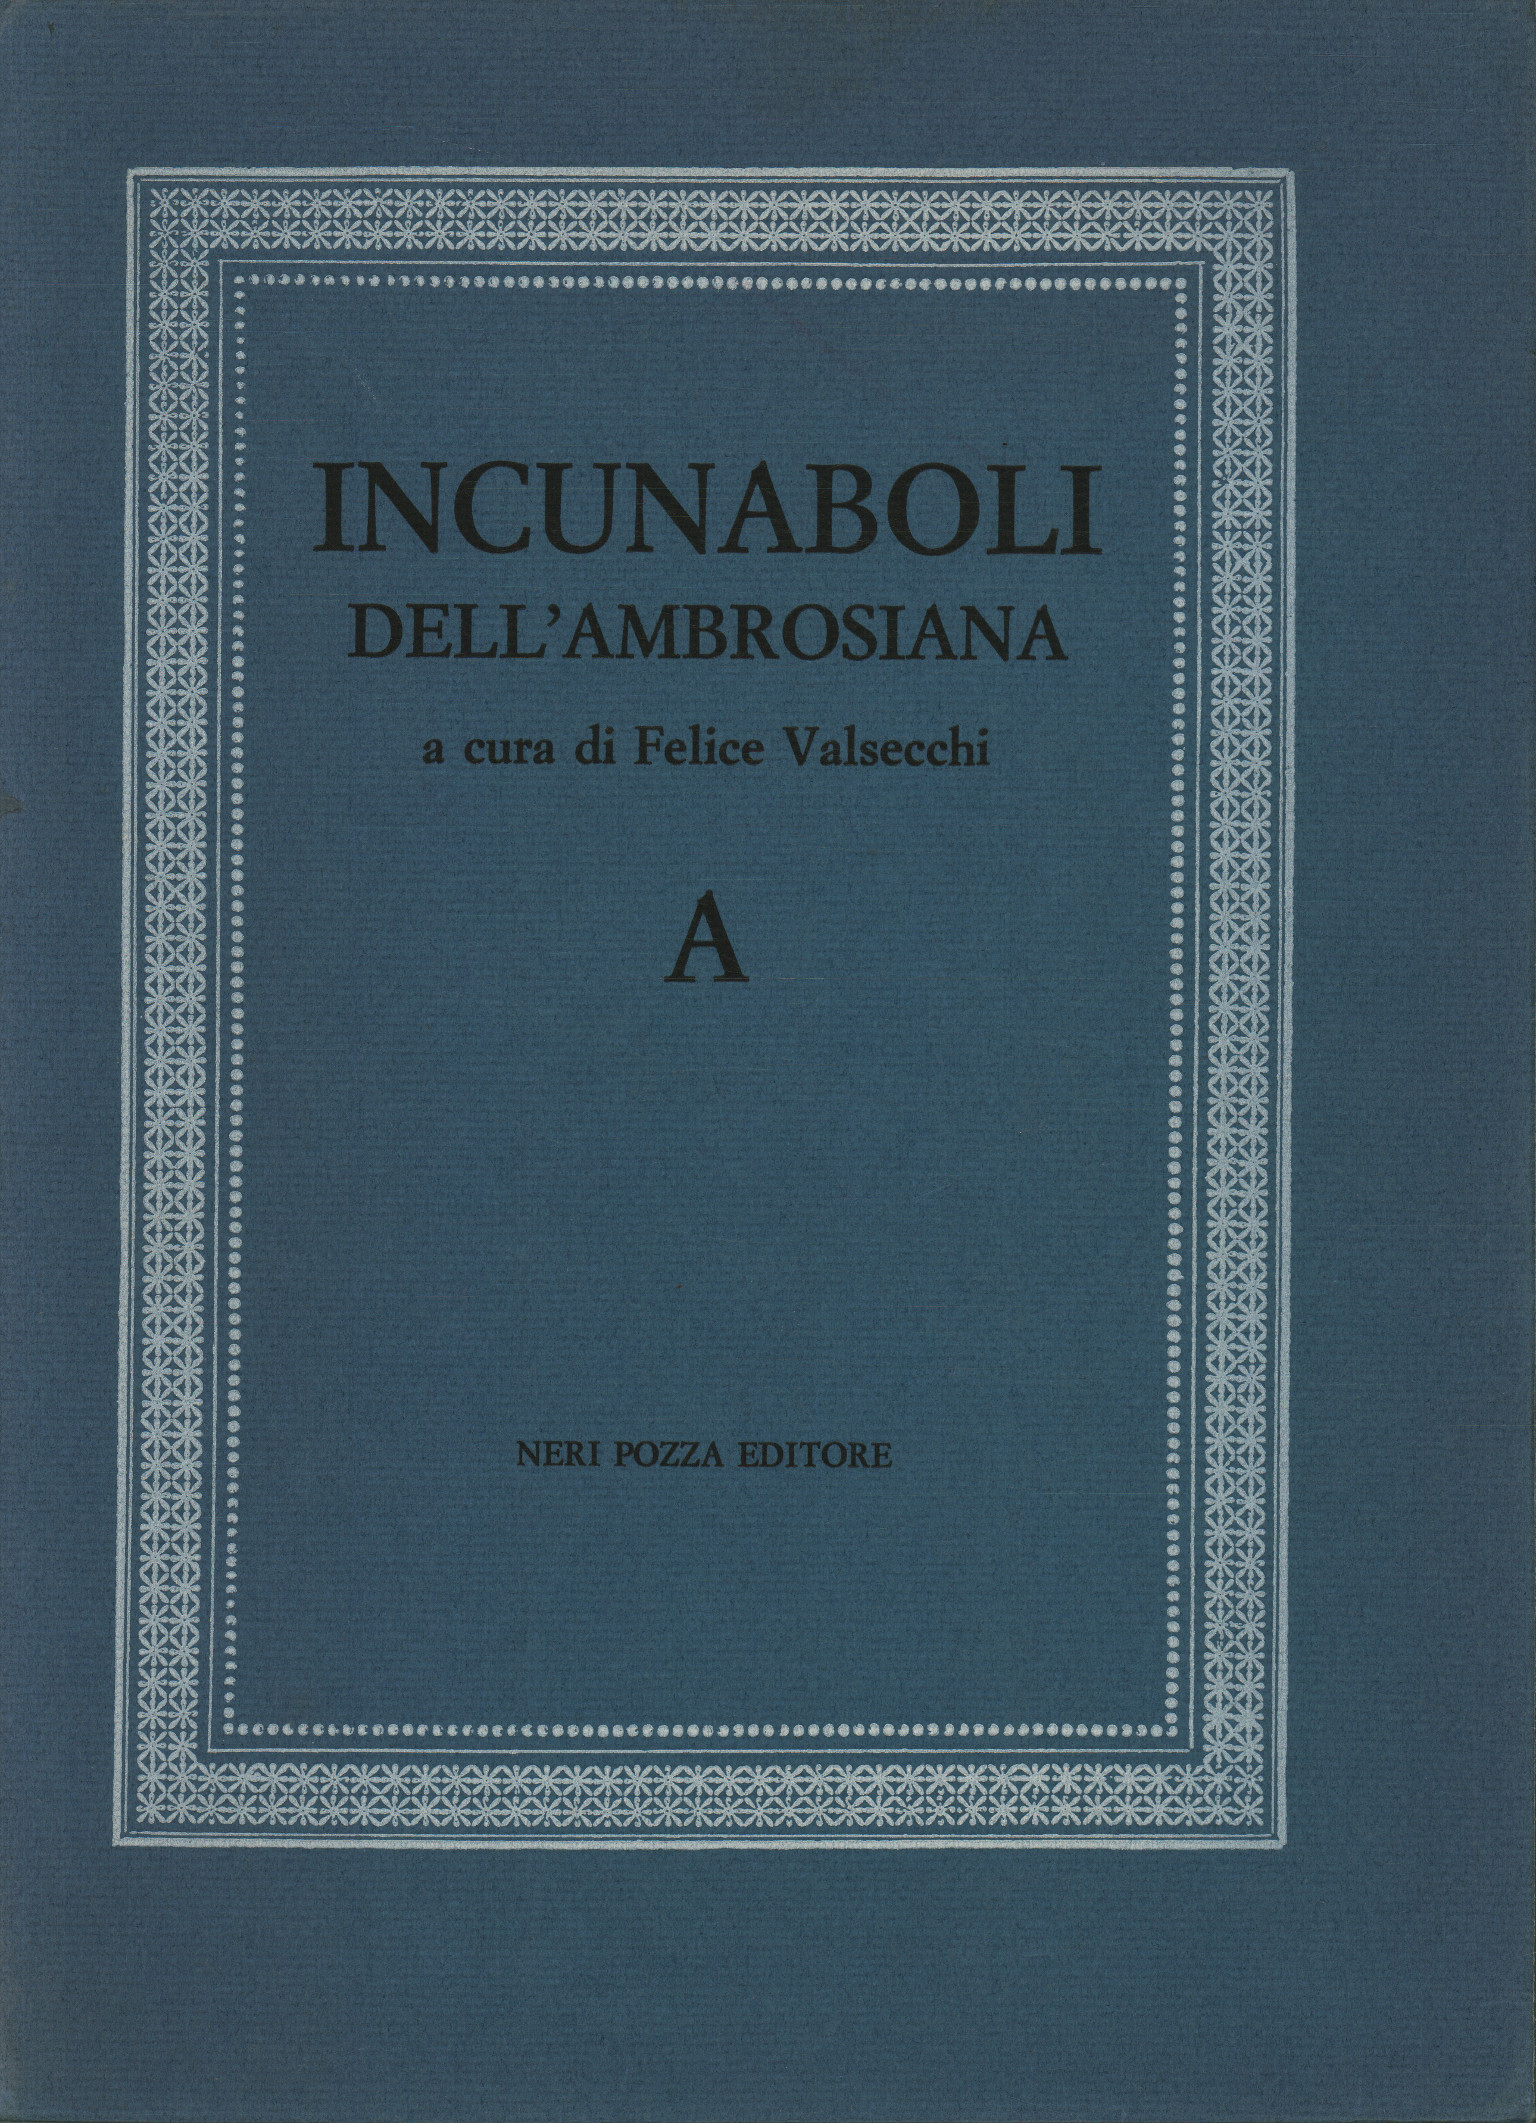 The incunabula of the Ambrosiana